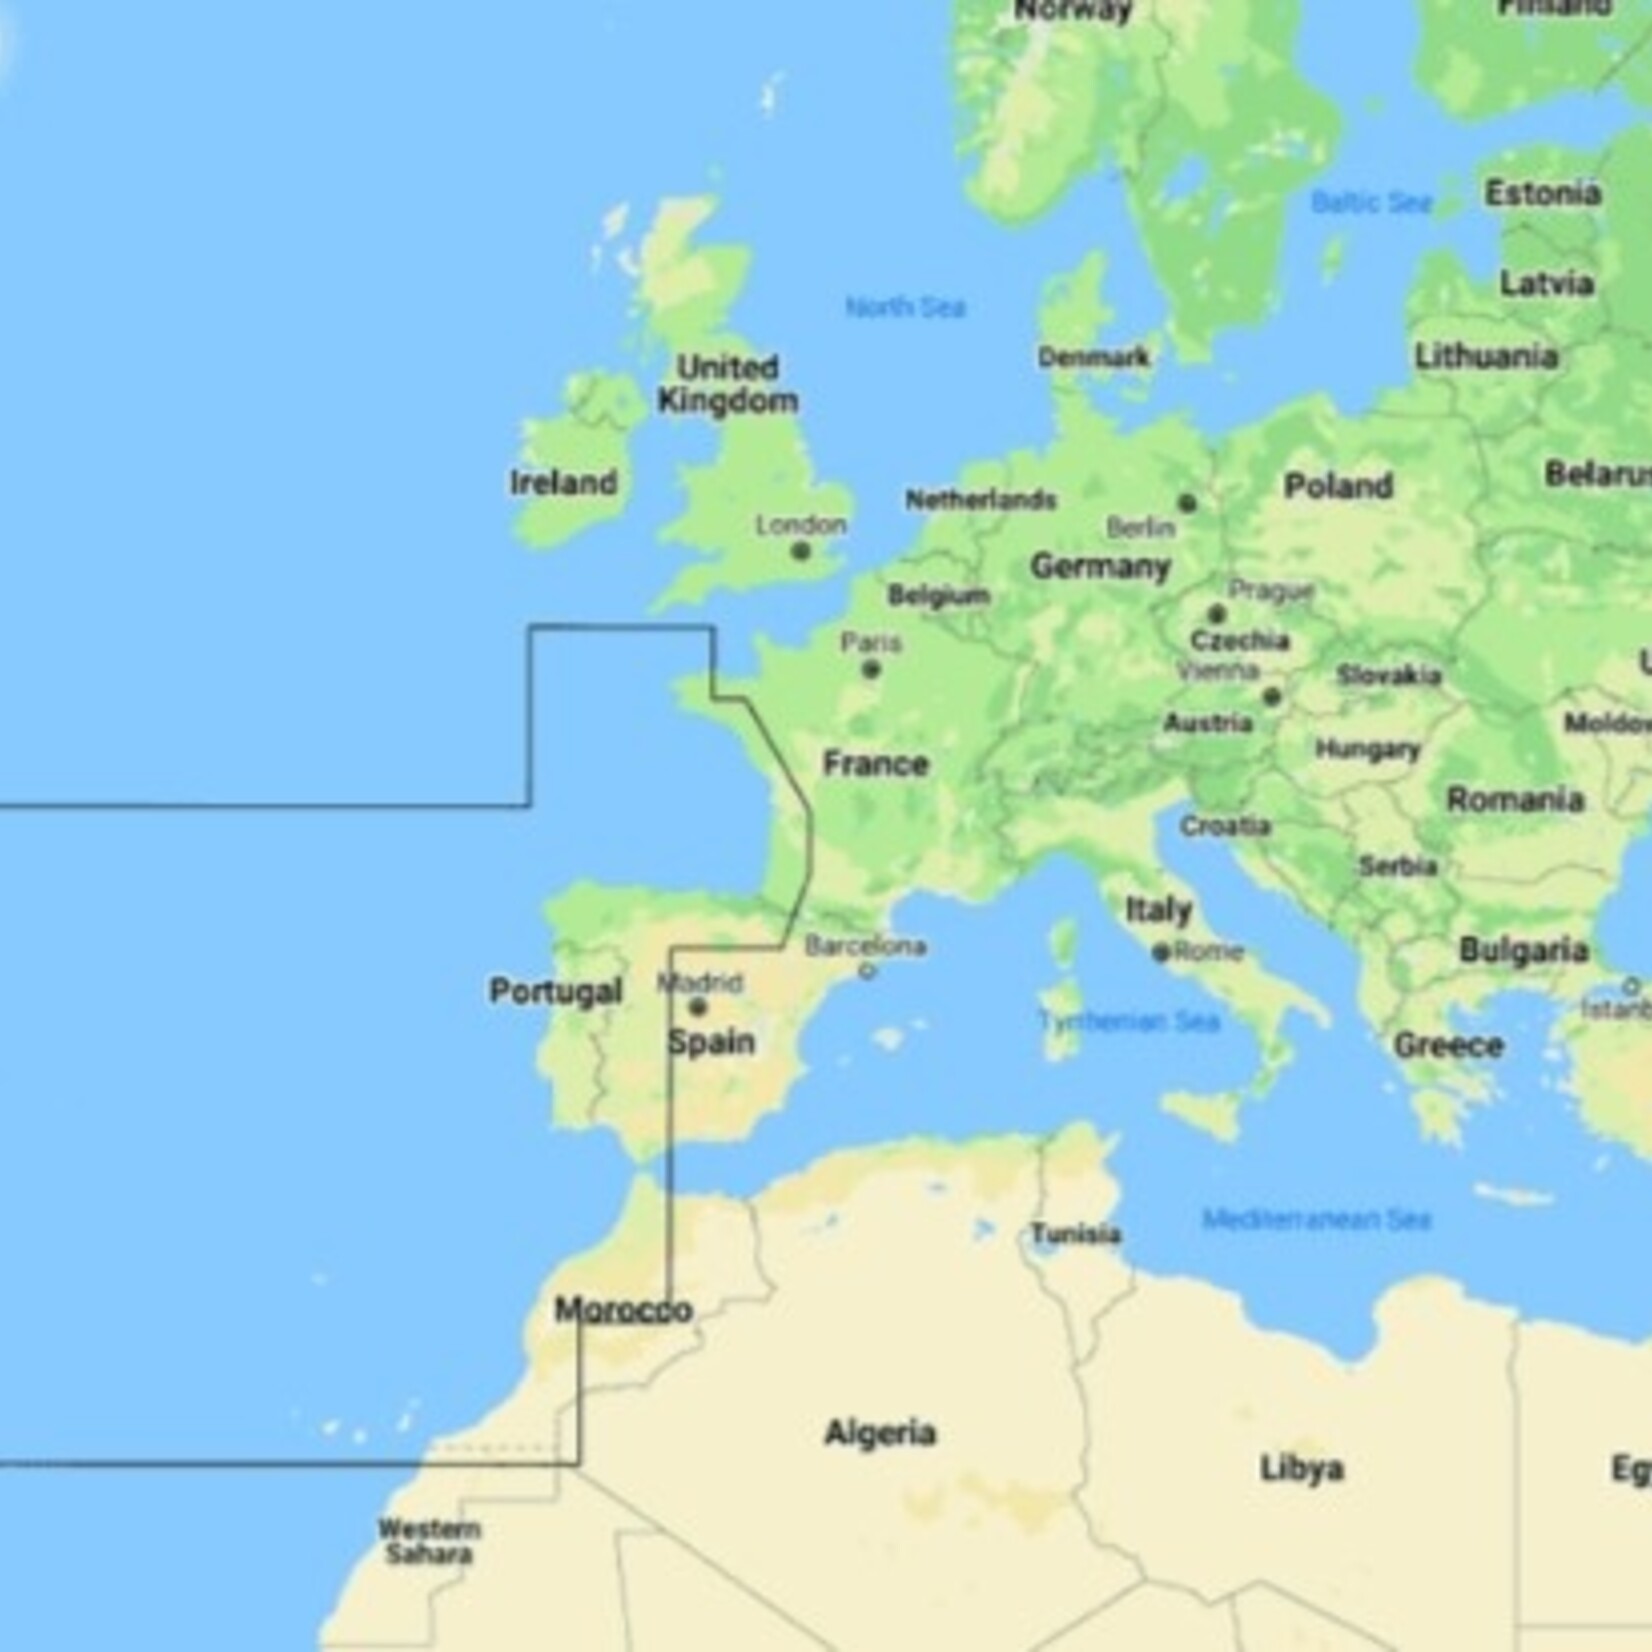 C-MAP REVEAL - West European Coasts